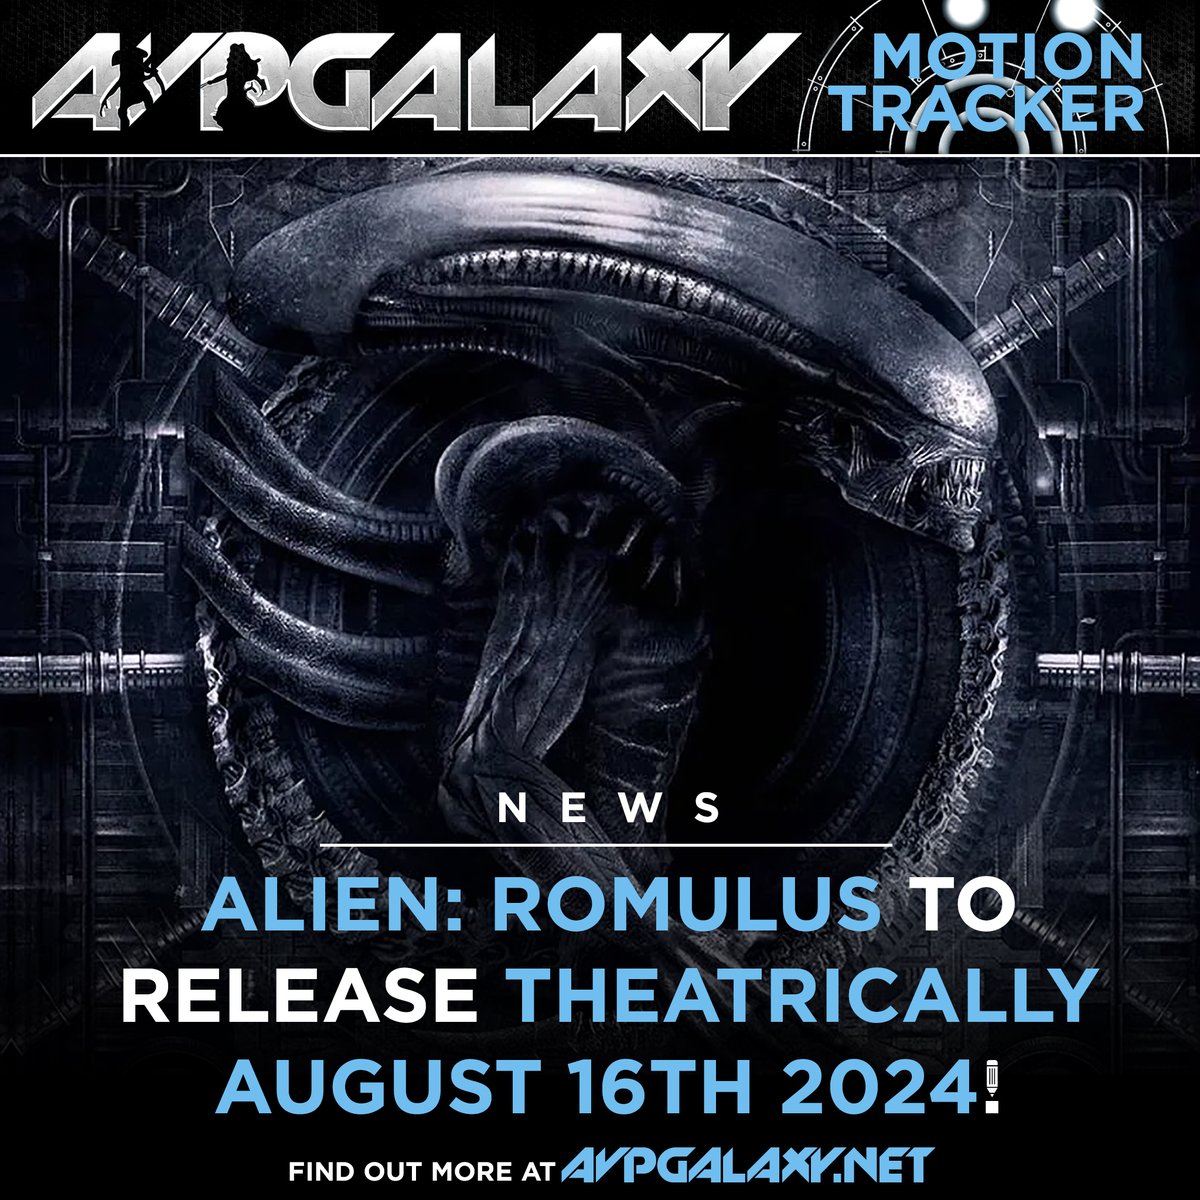 Alien: Romulus To Release Theatrically August 16th 2024! avpgalaxy.net/2023/06/13/ali… #Alien #Aliens #AlienRomulus #FedeAlvarez #IsabelaMerced #CaileeSpaeny #ArchieRenaux #DavidJonsson #SpikeFearn #AileenWu